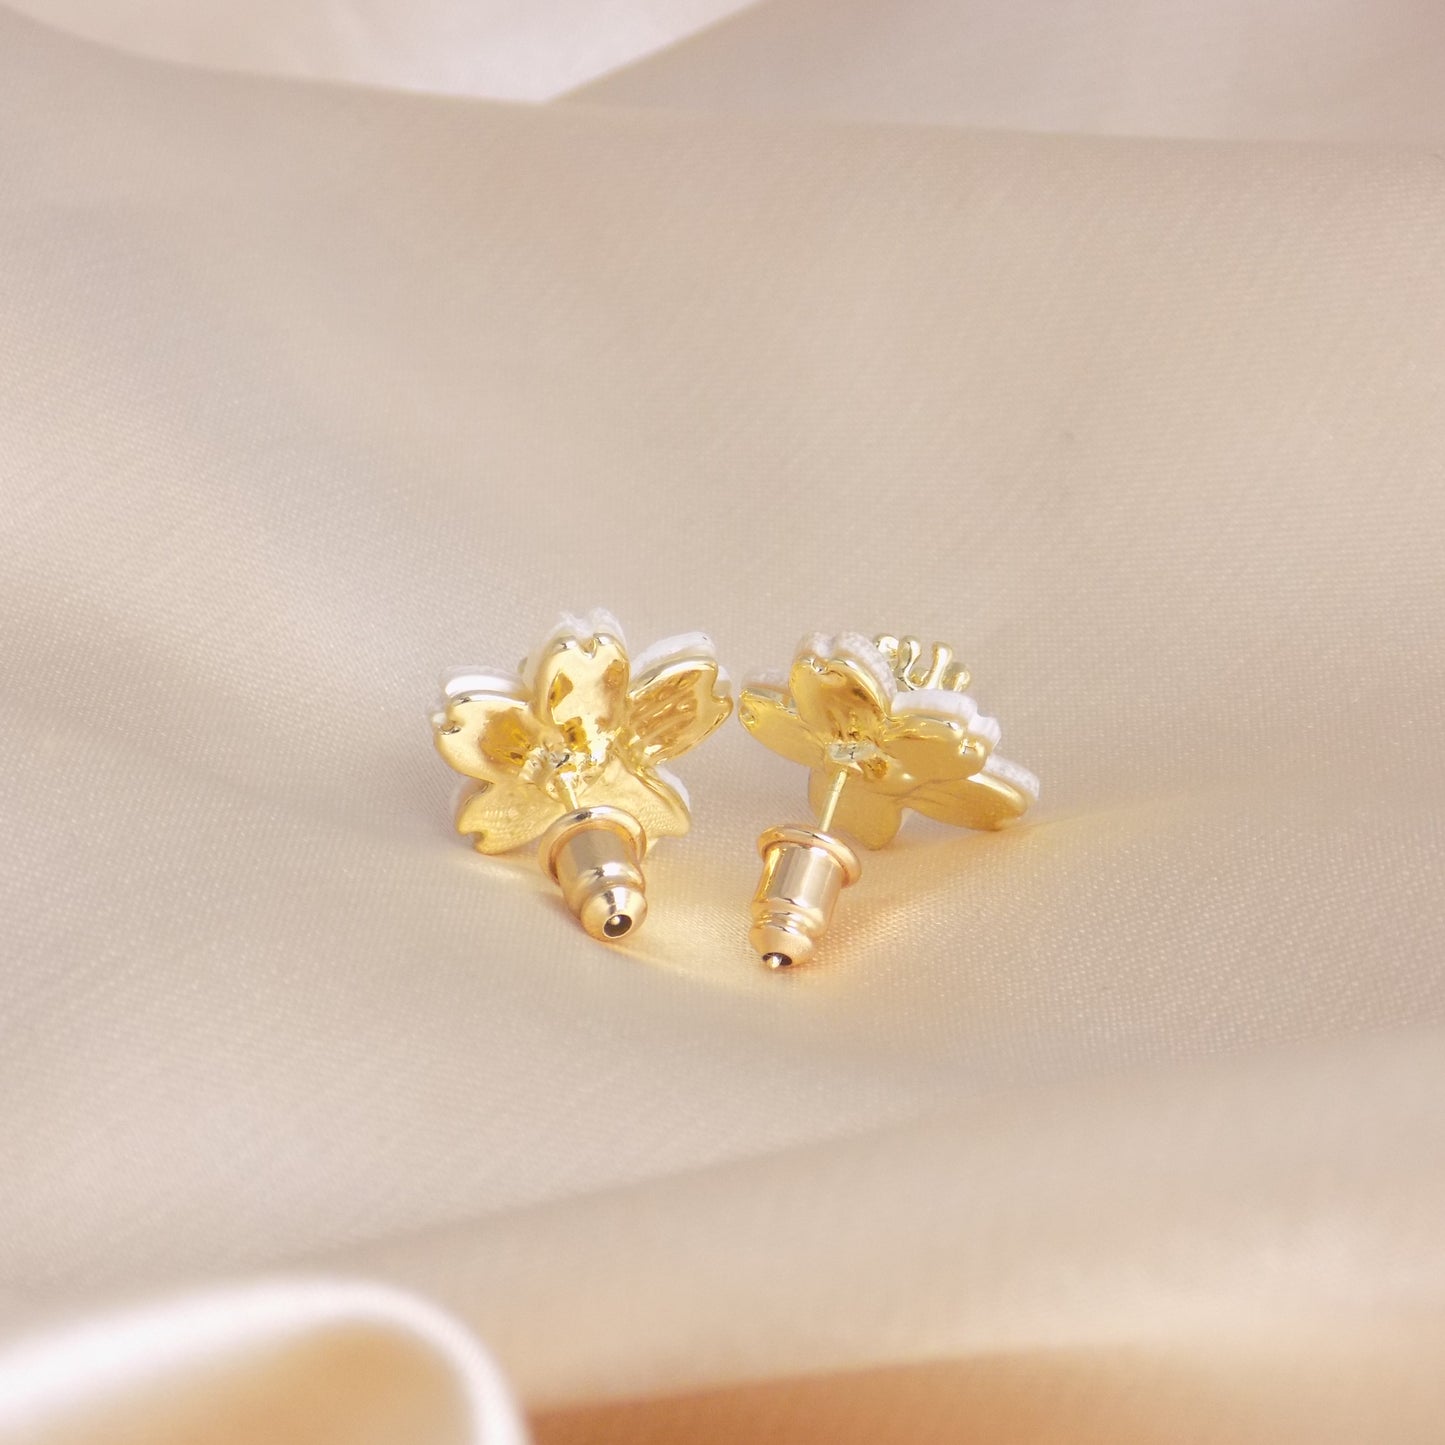 Mother of Pearl White Flower Stud Earrings 18K Gold Stainless Steel